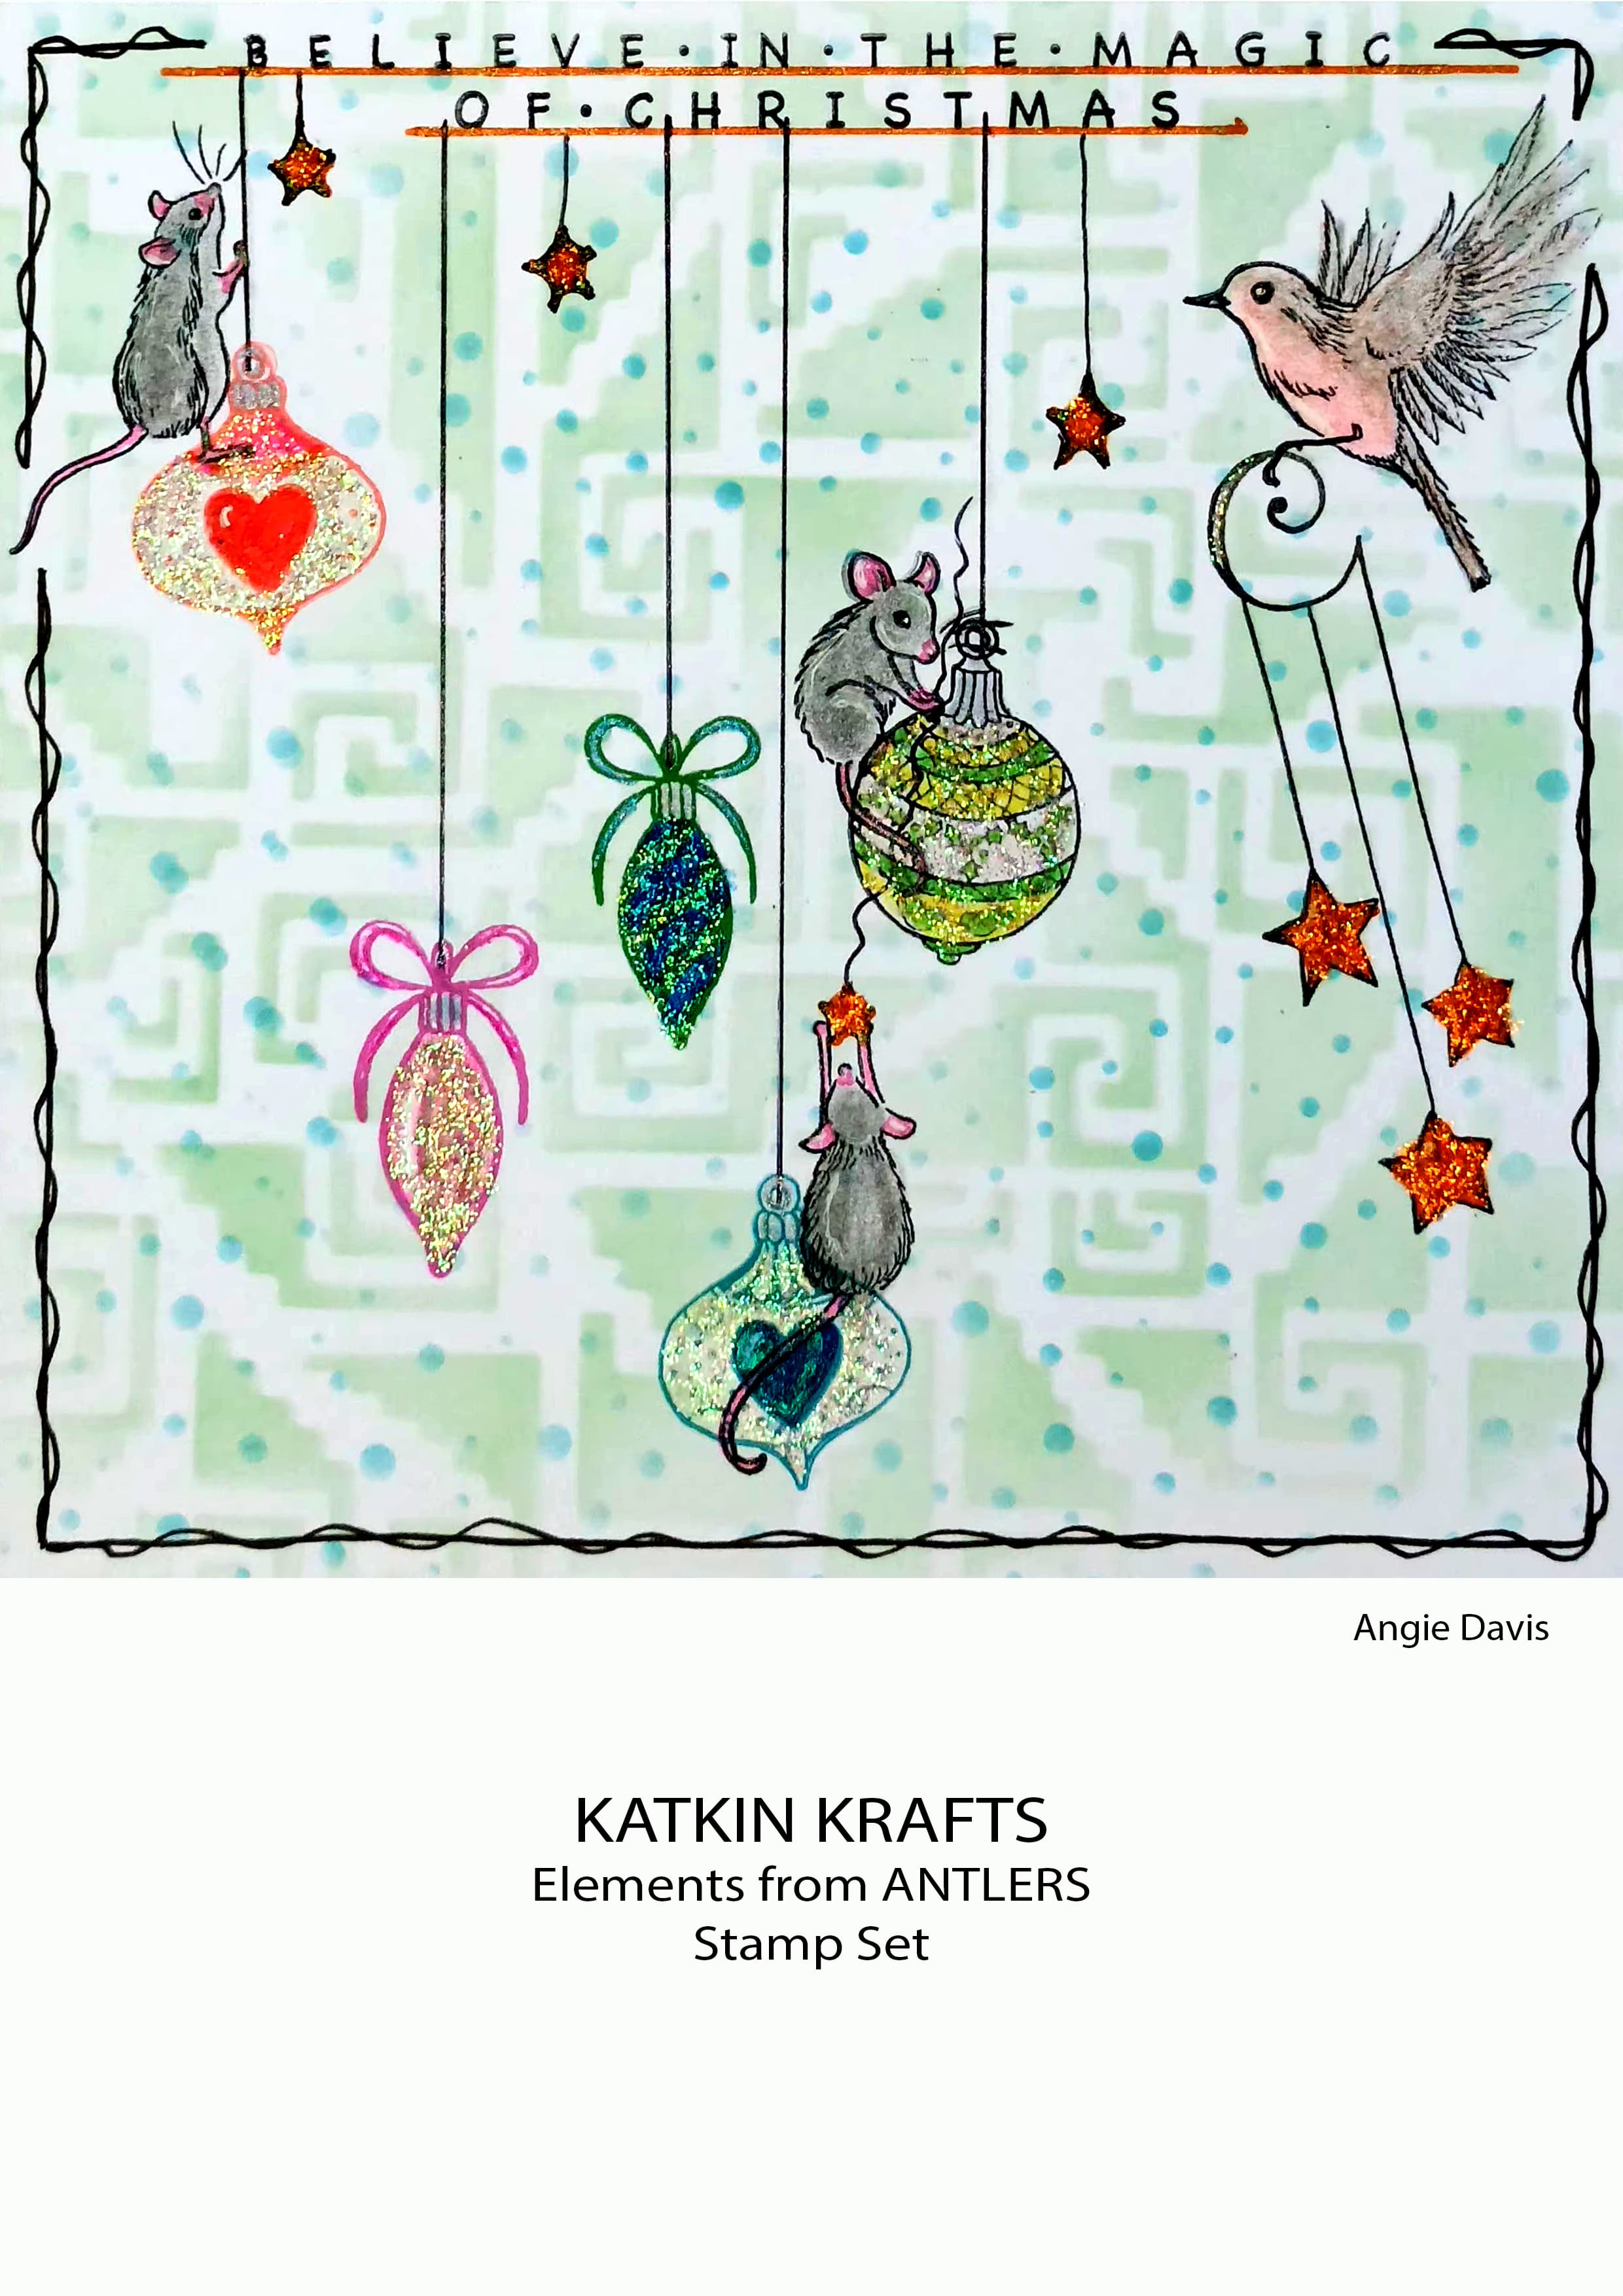 Katkin Krafts Antlers 6 in x 8 in Clear Stamp Set